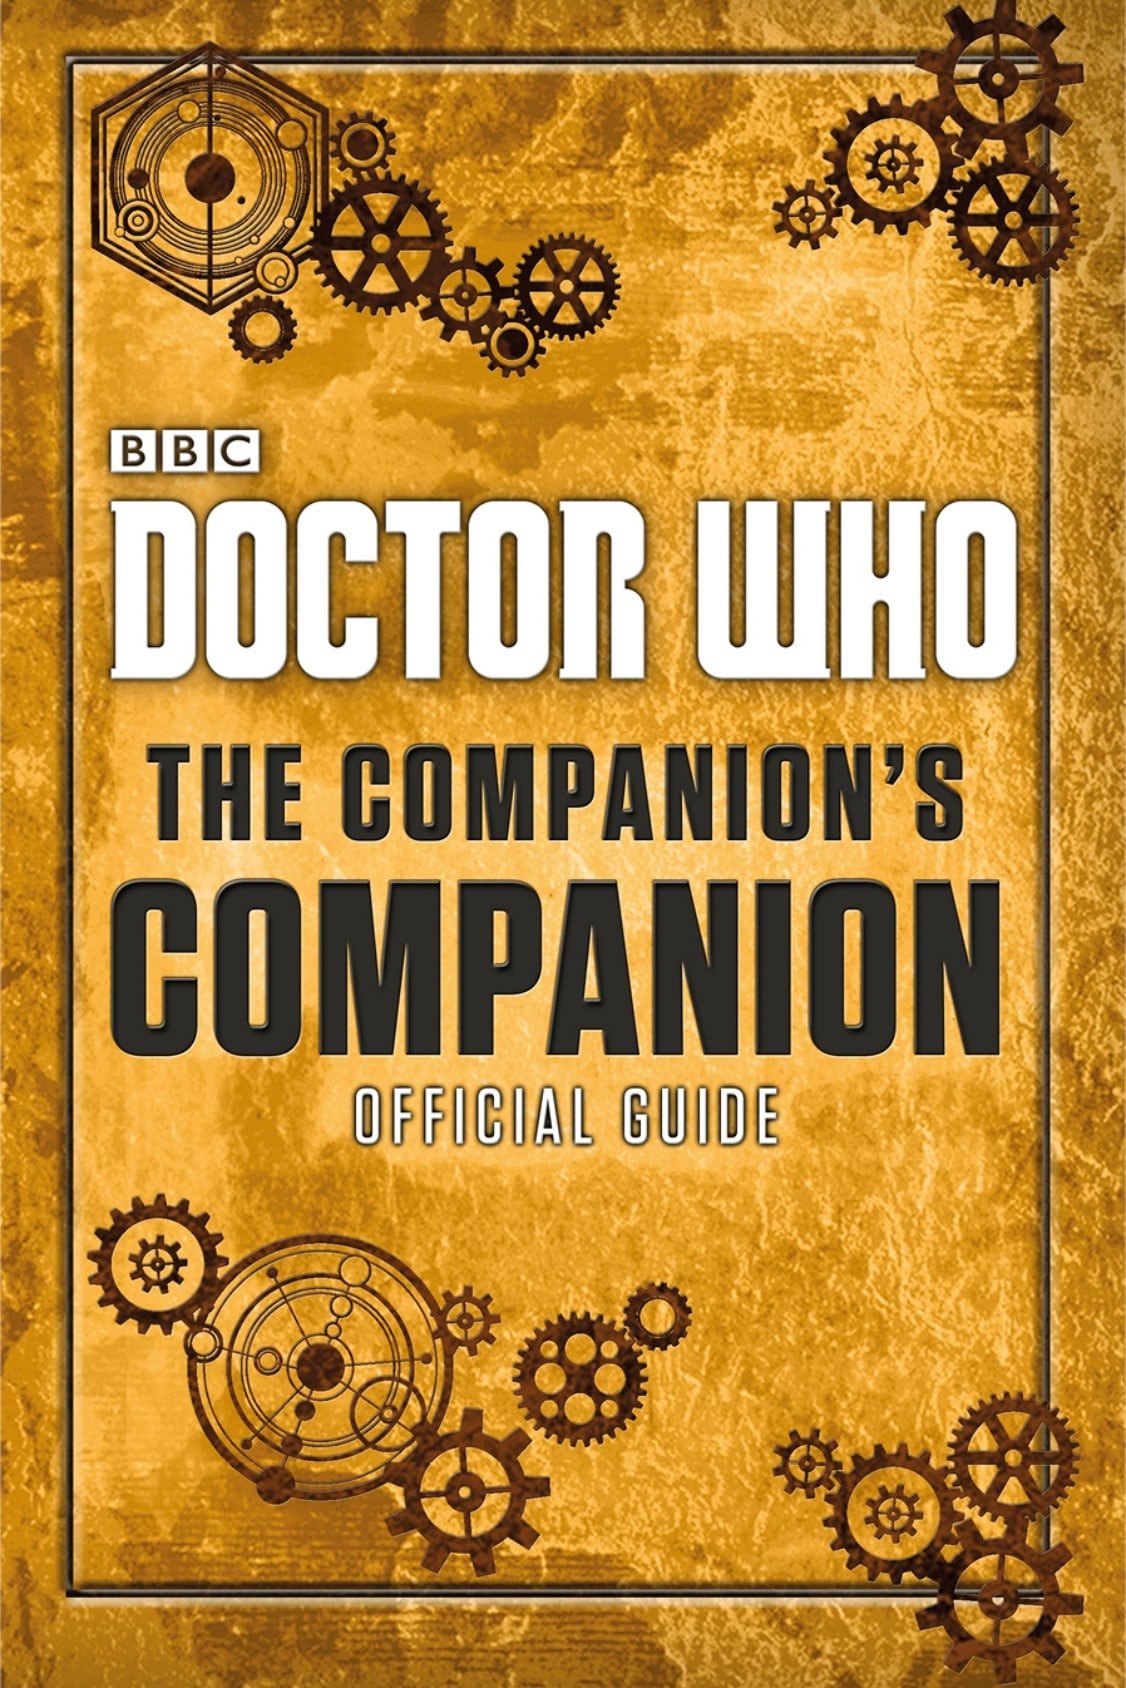 Doctor Who: The Companion’s Companion